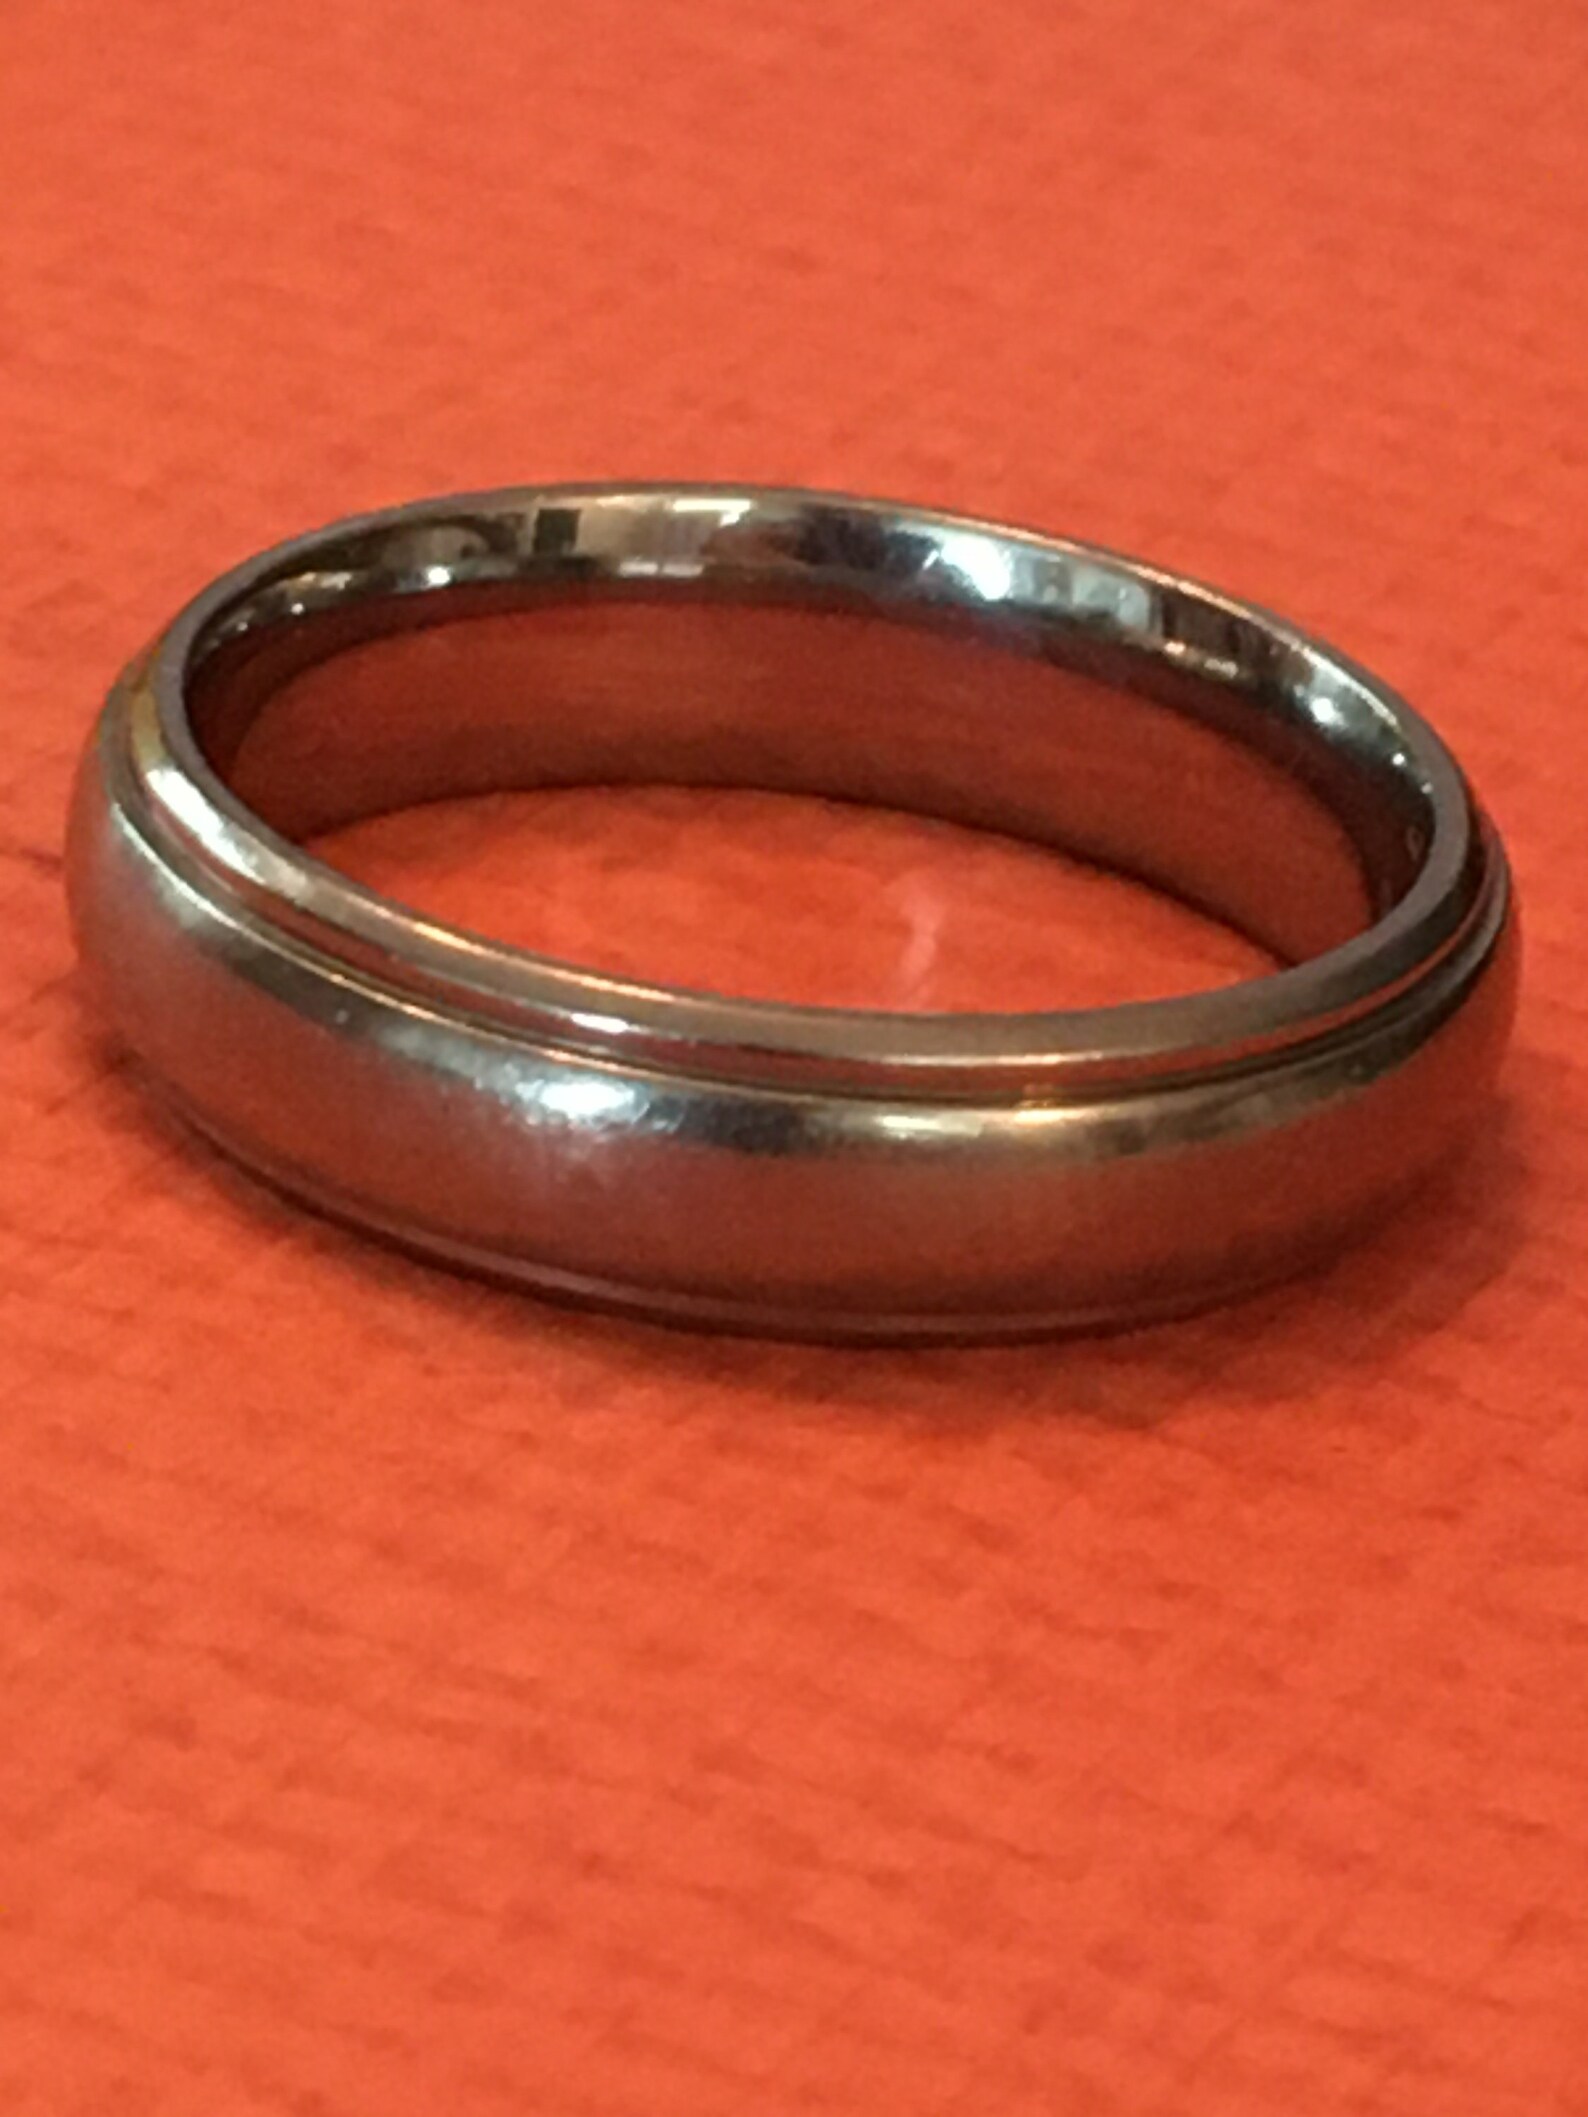 Vintage Titan Titanium mens ring wedding band size 11.5 Etsy